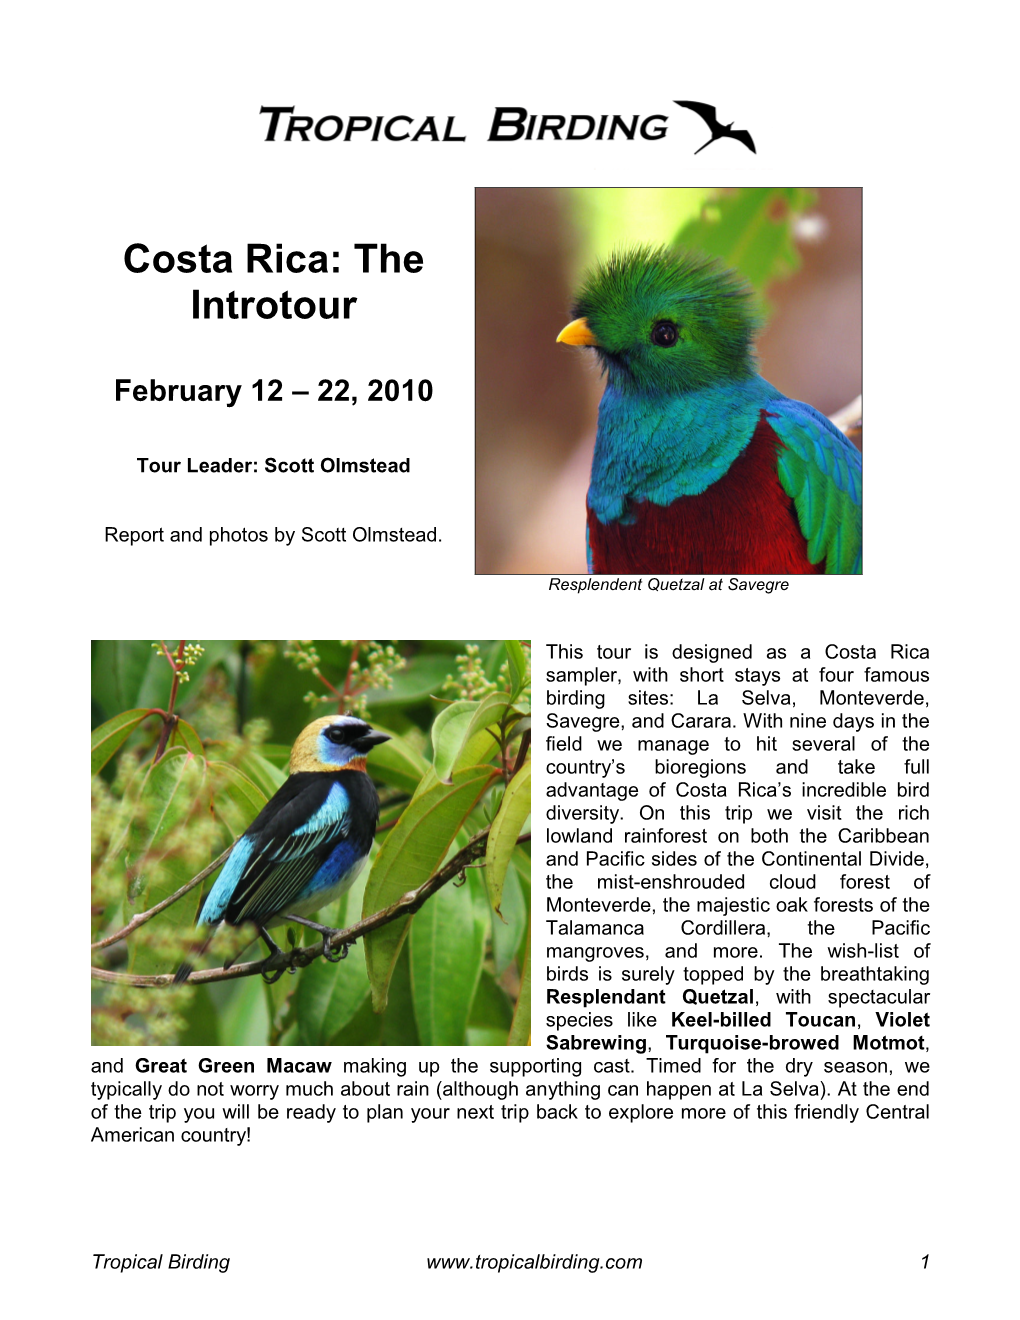 Tropical Birding Tour Report